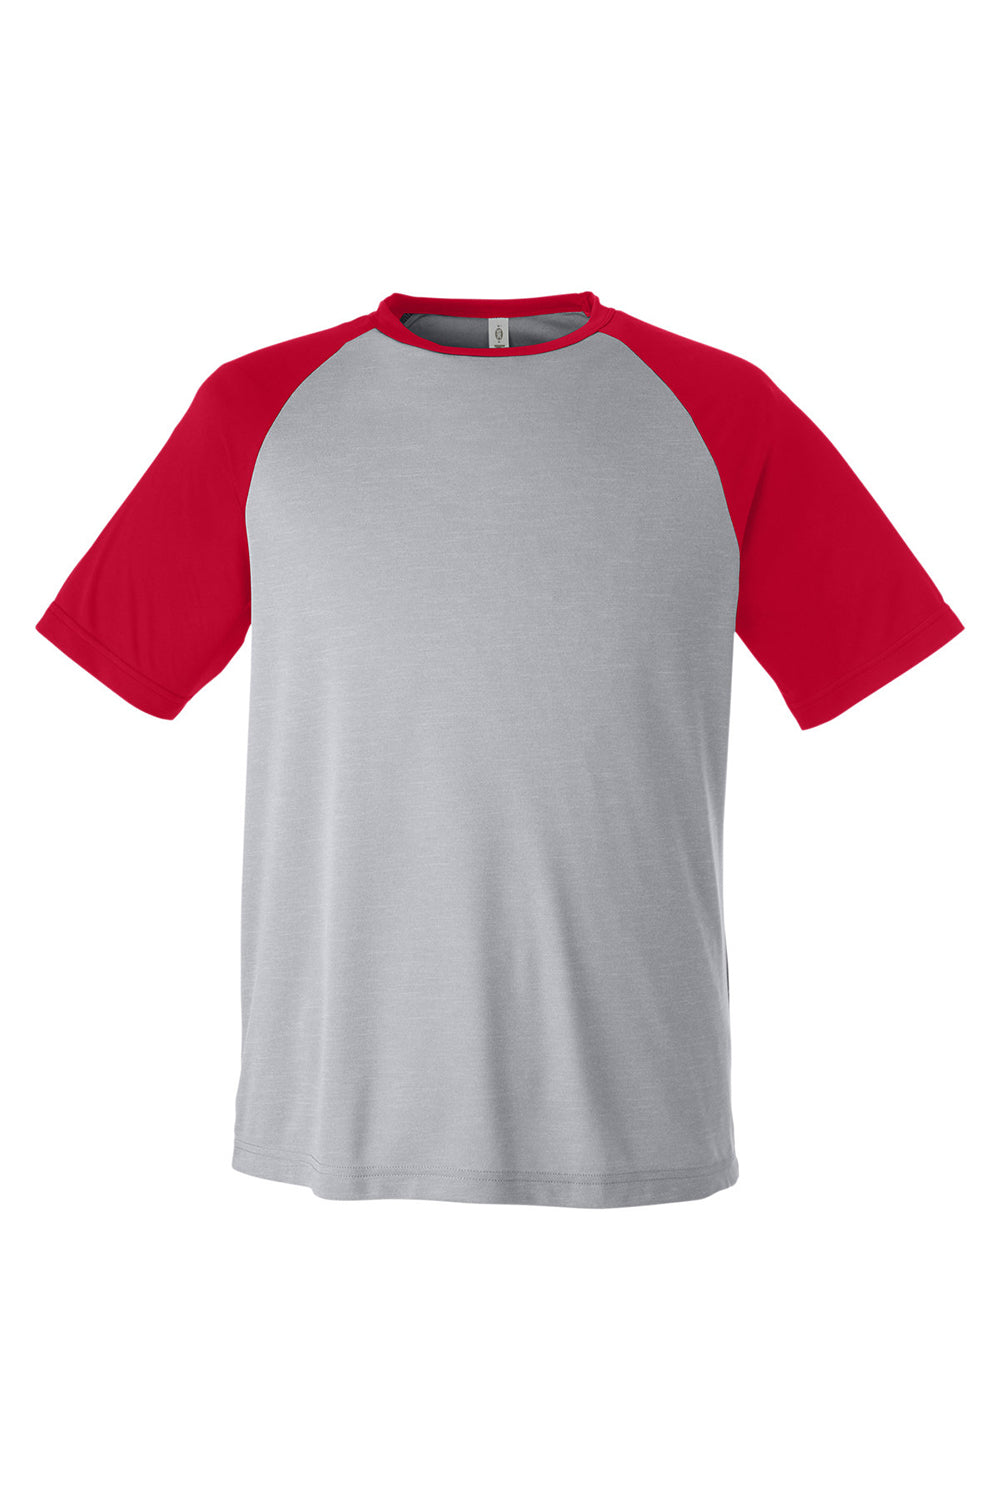 Team 365 TT62 Mens Zone Colorblock Moisture Wicking Short Sleeve Crewneck T-Shirt Heather Grey/Red Flat Front